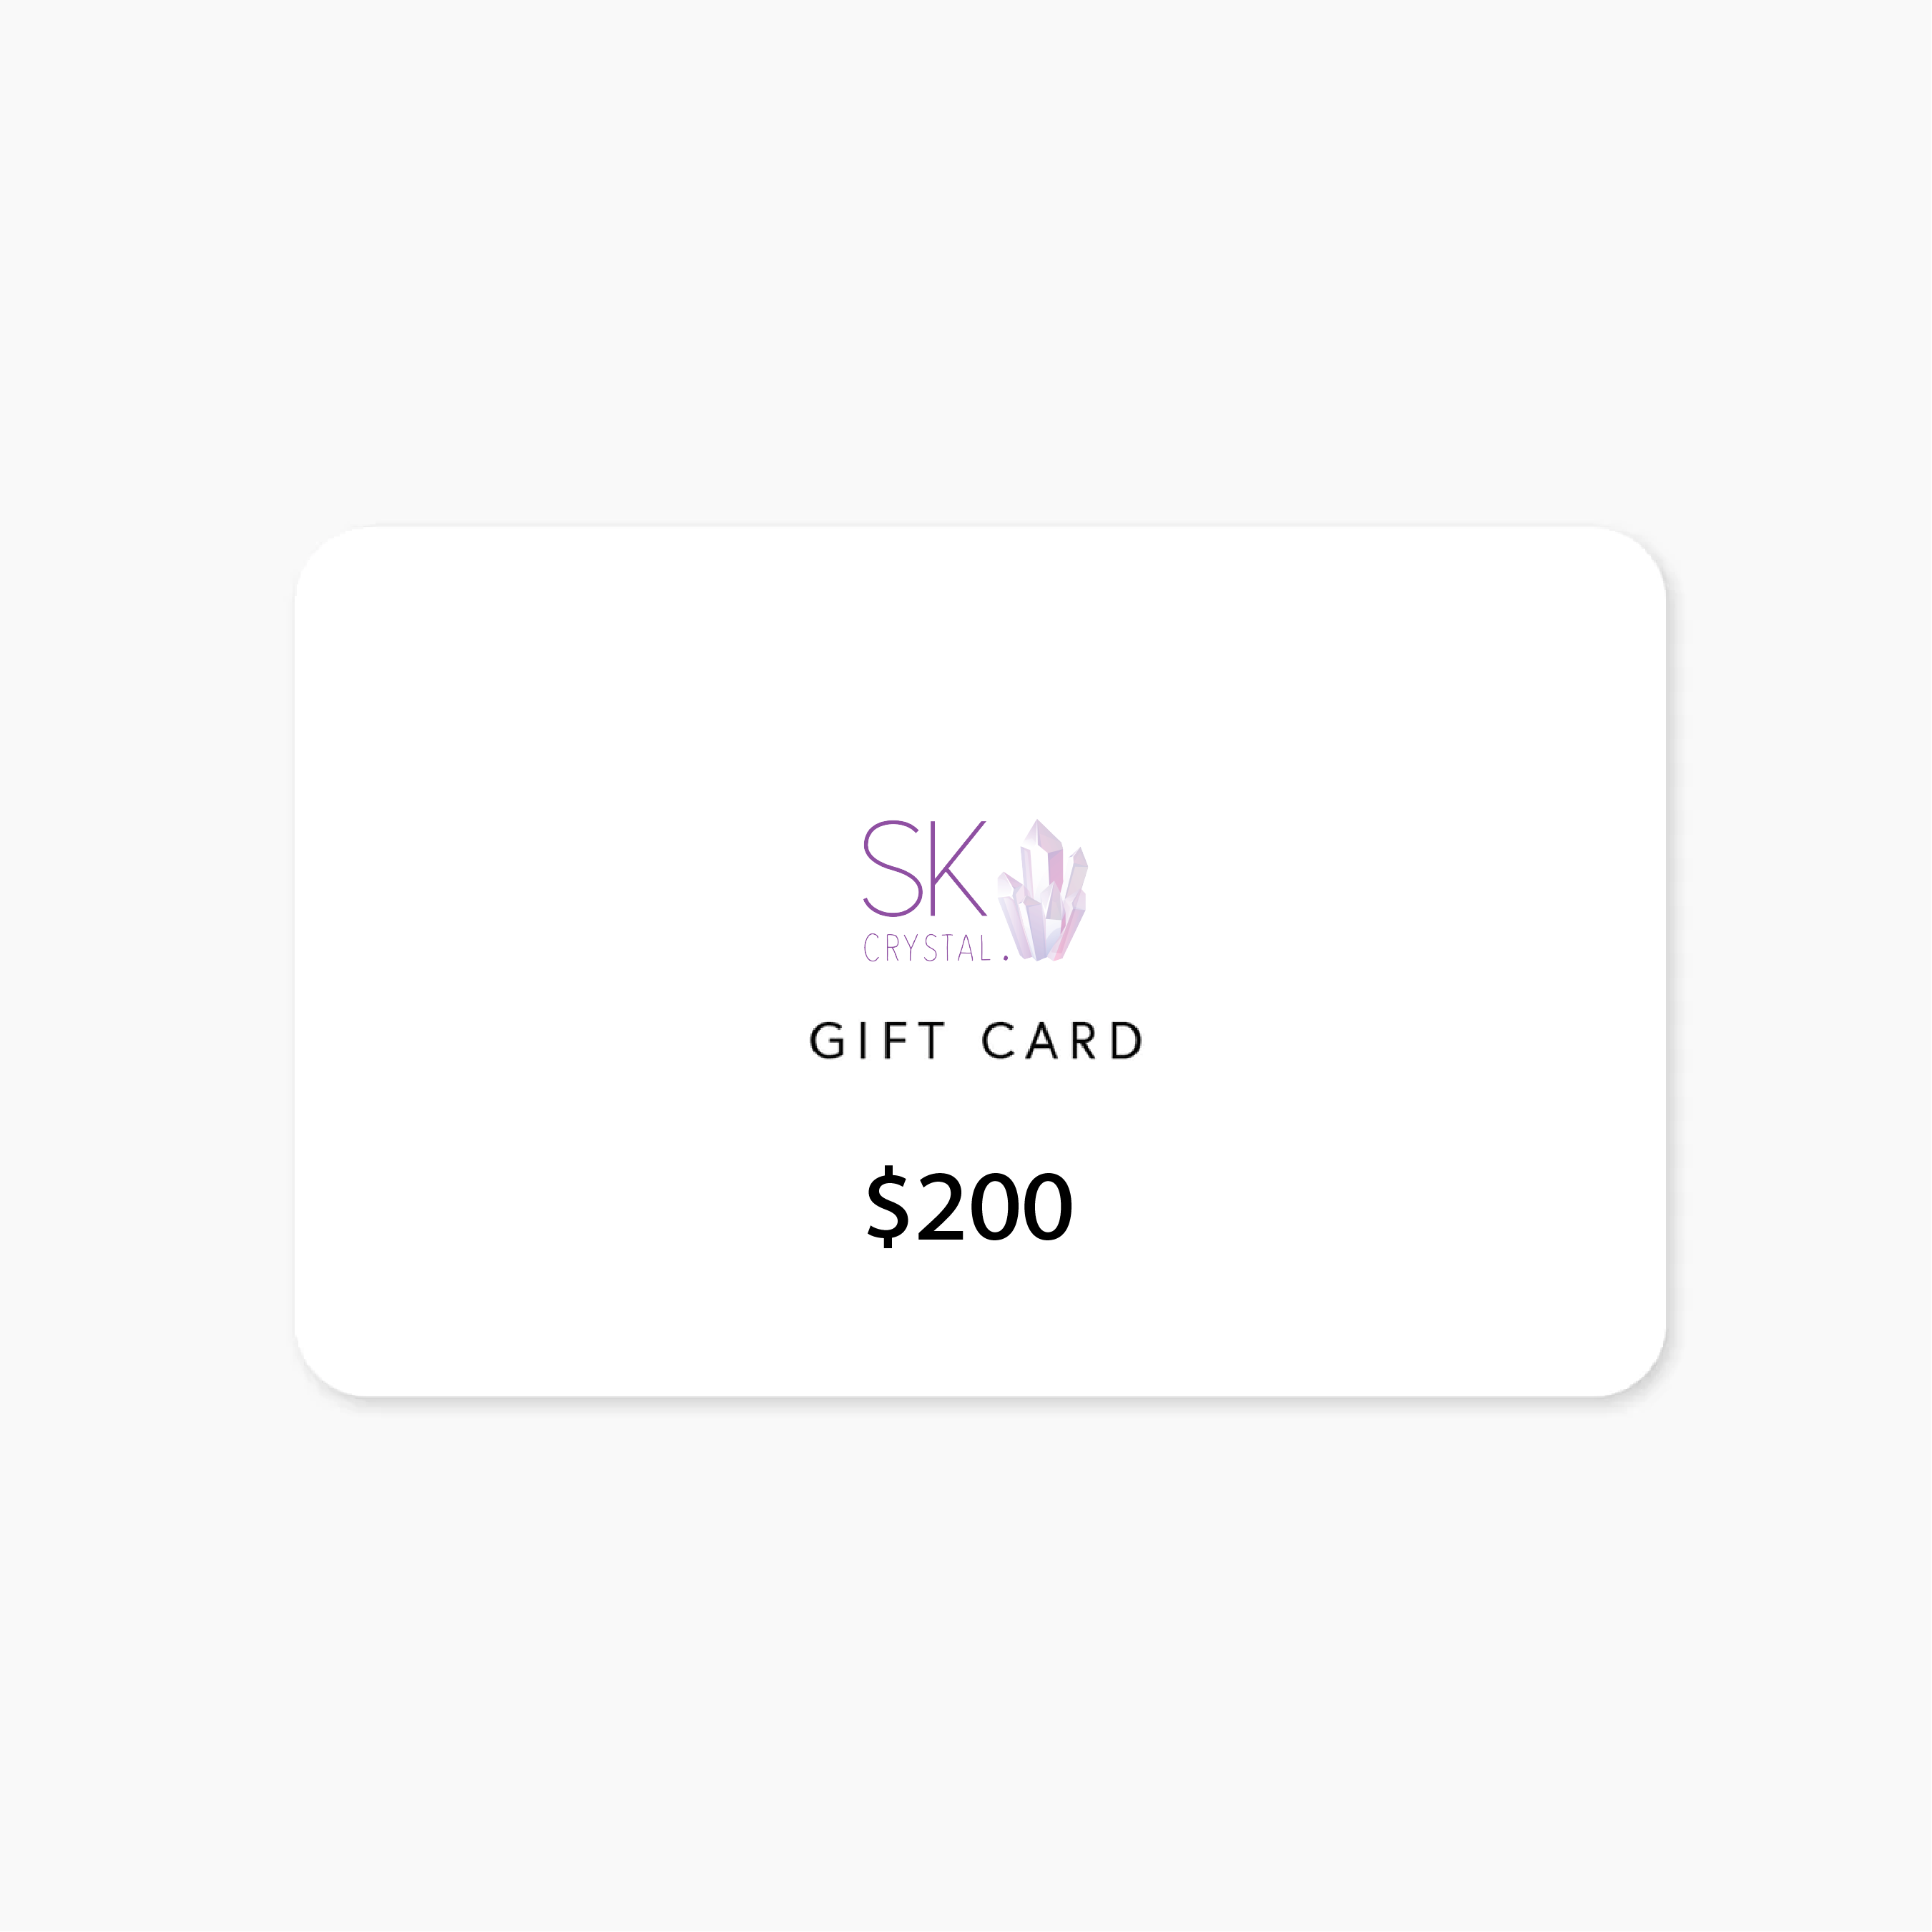 GIFT CARD $200